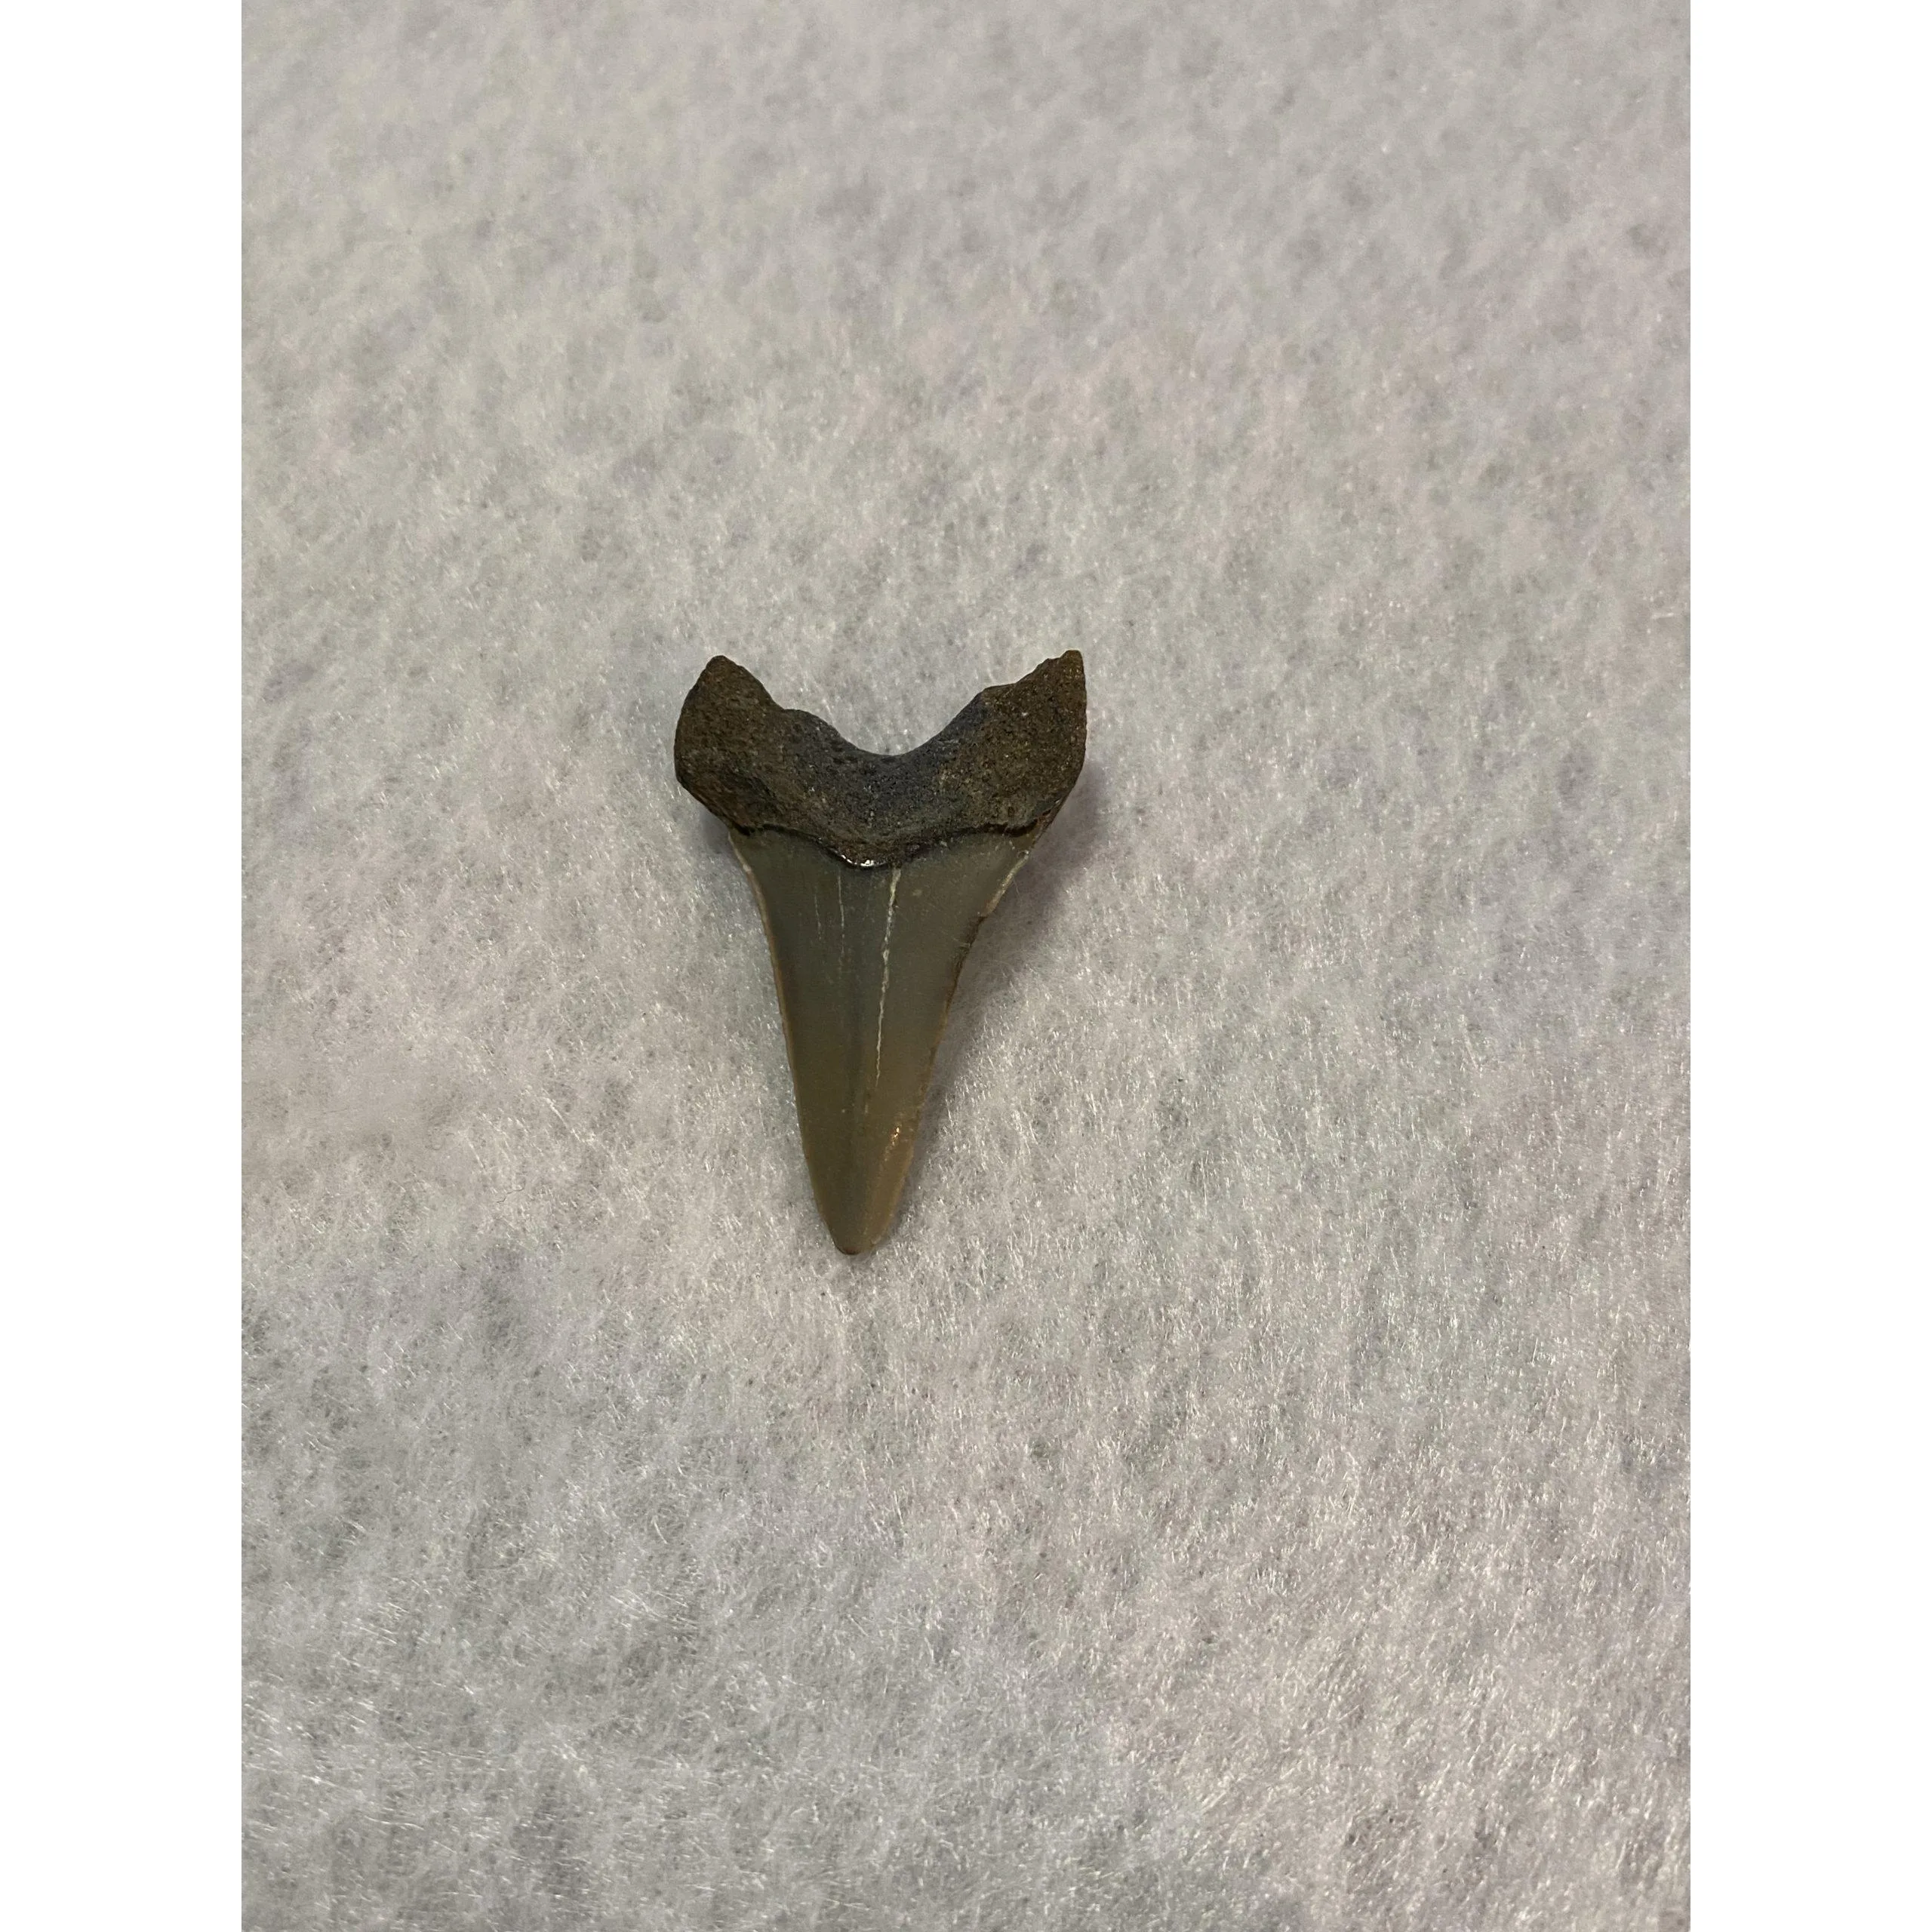 Megalodon Tooth, Bone Valley, Florida,1.55 inch Prehistoric Online